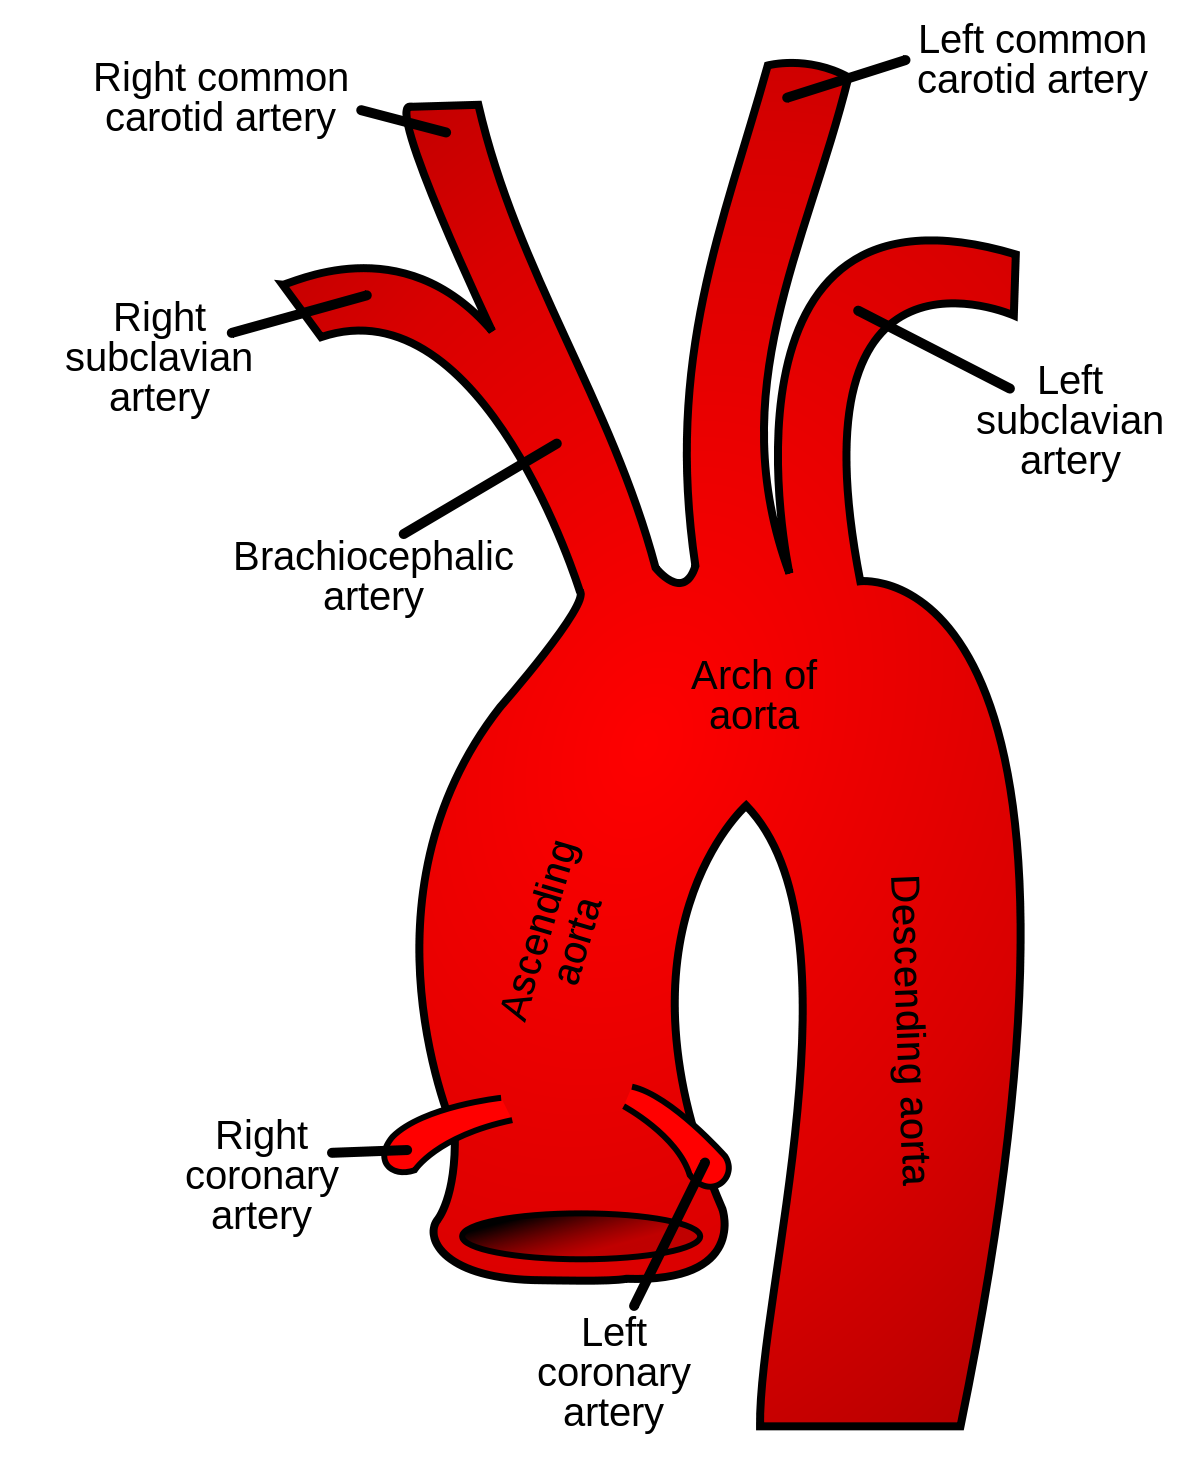 Aortic arch - Wikipedia